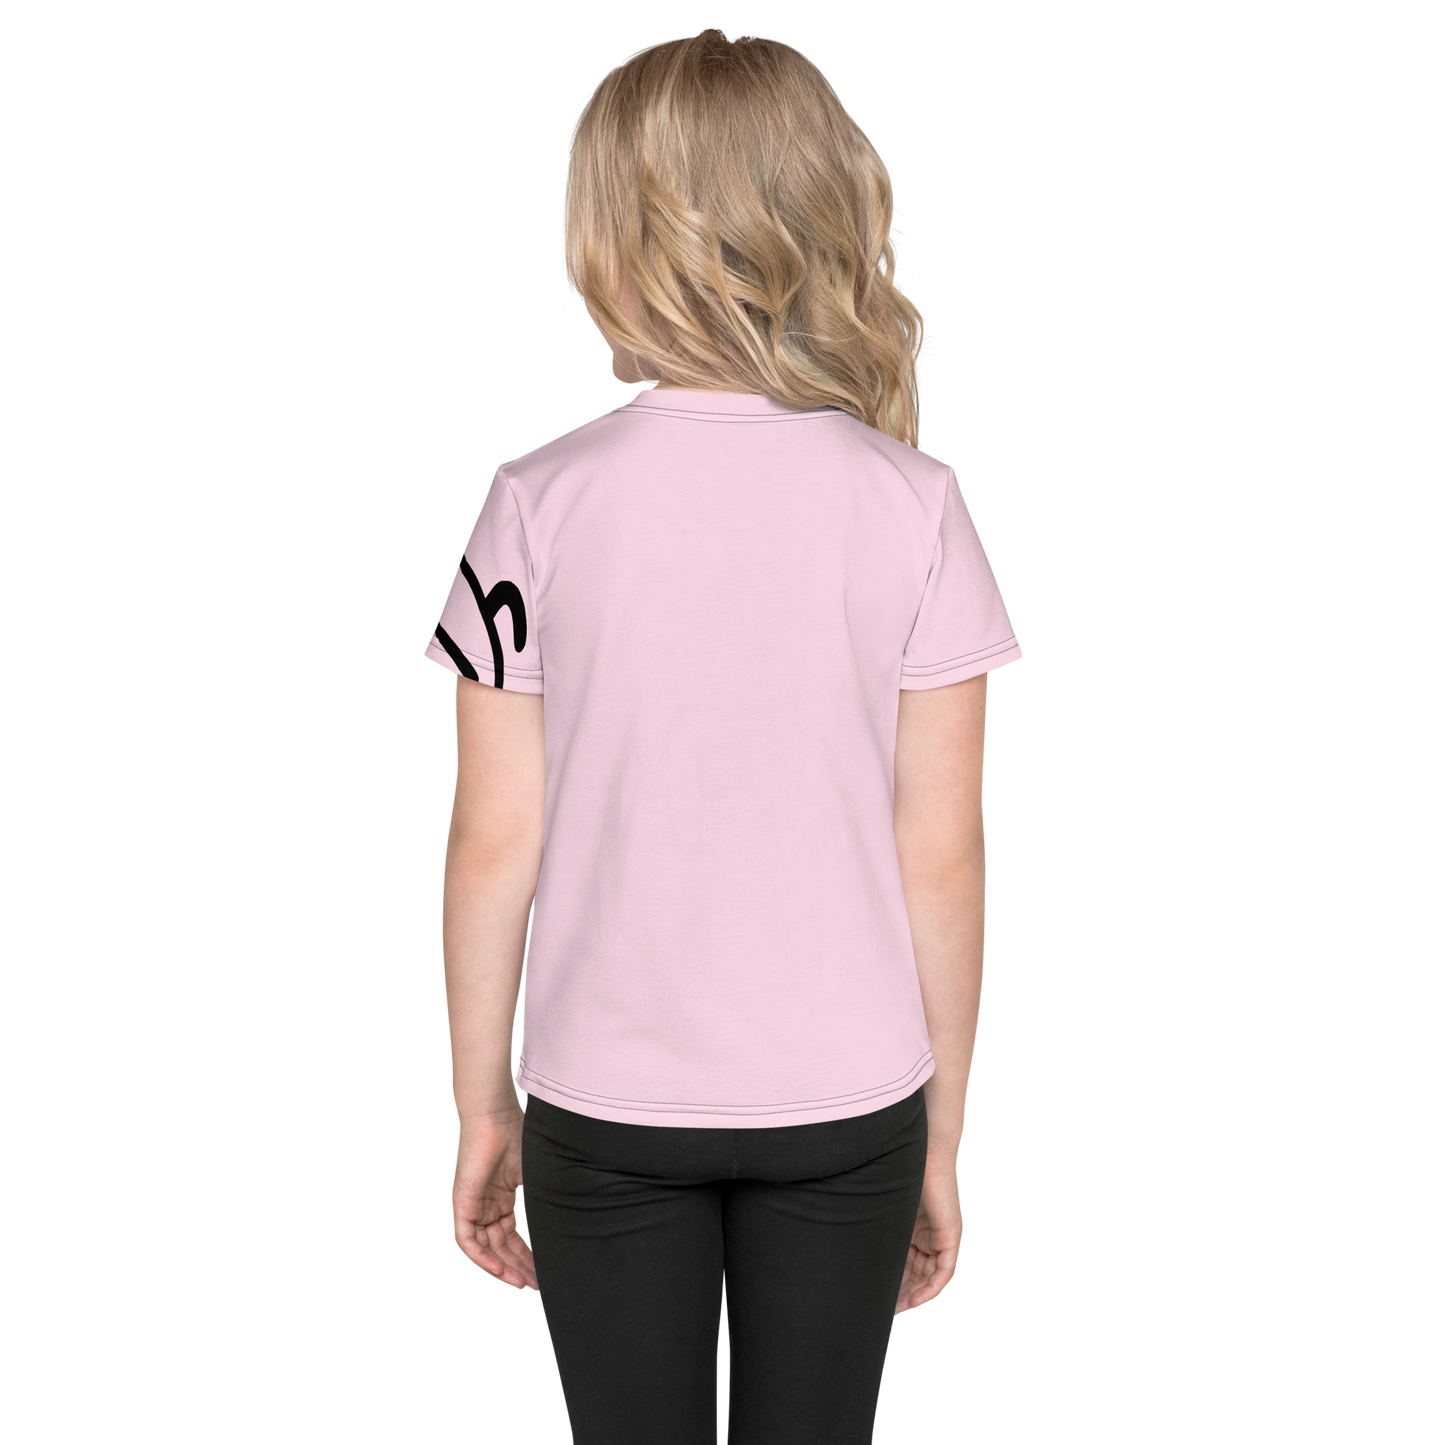 WeBearish Kid's T-shirt (Pink/Black)